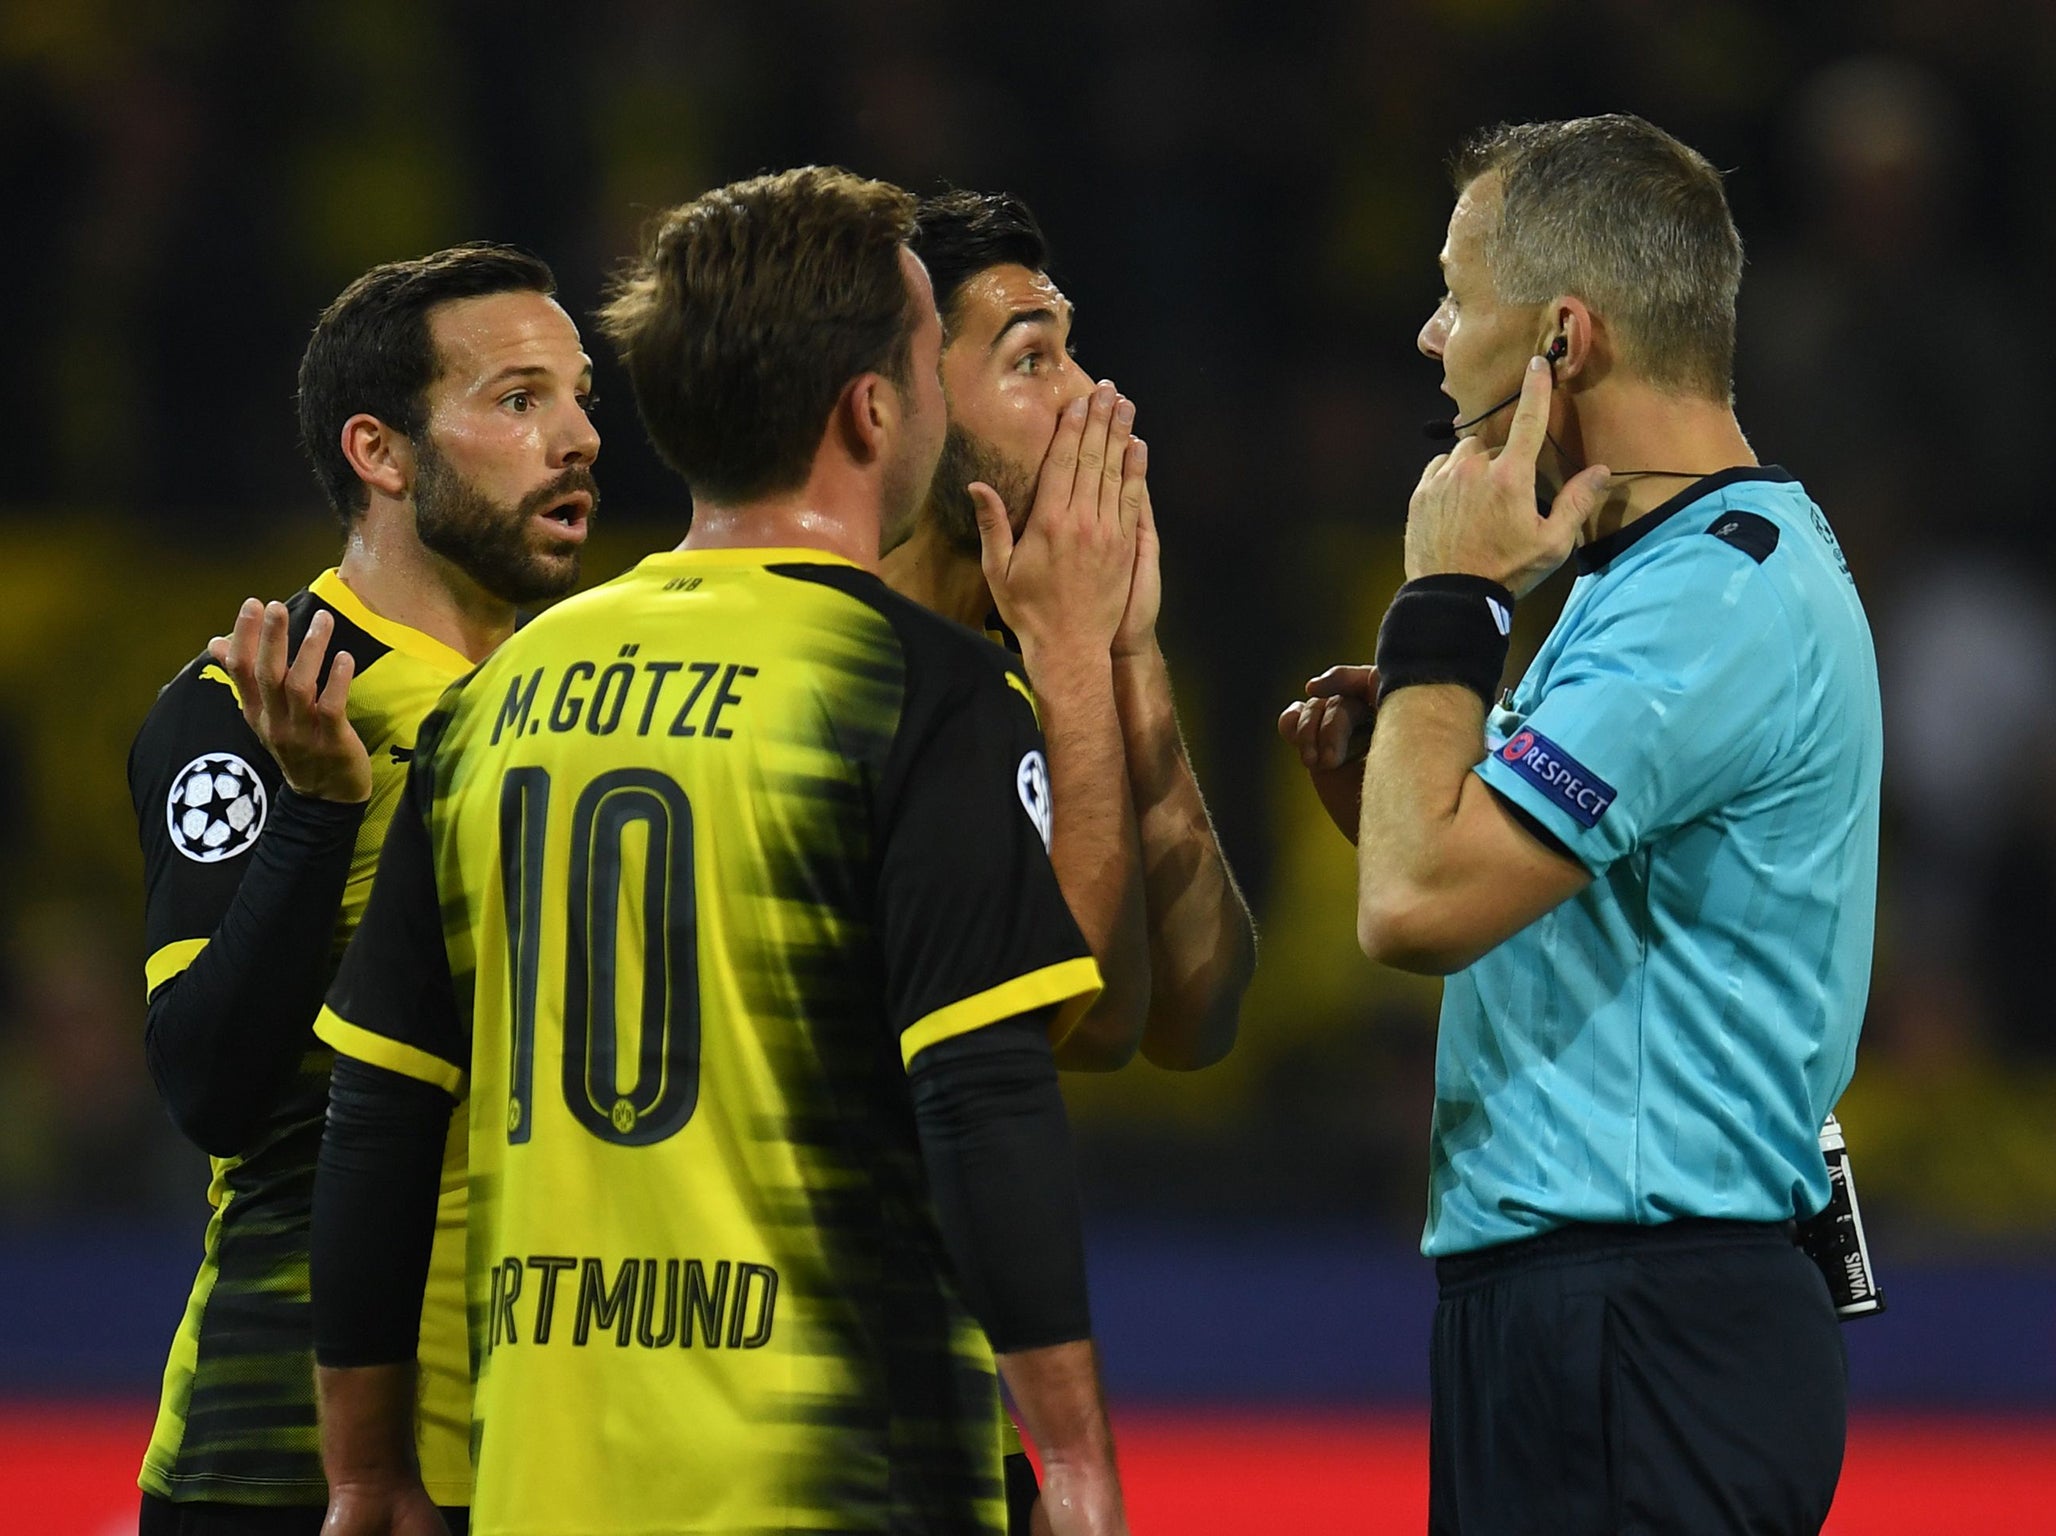 Dortmund cannot afford anymore slip-ups